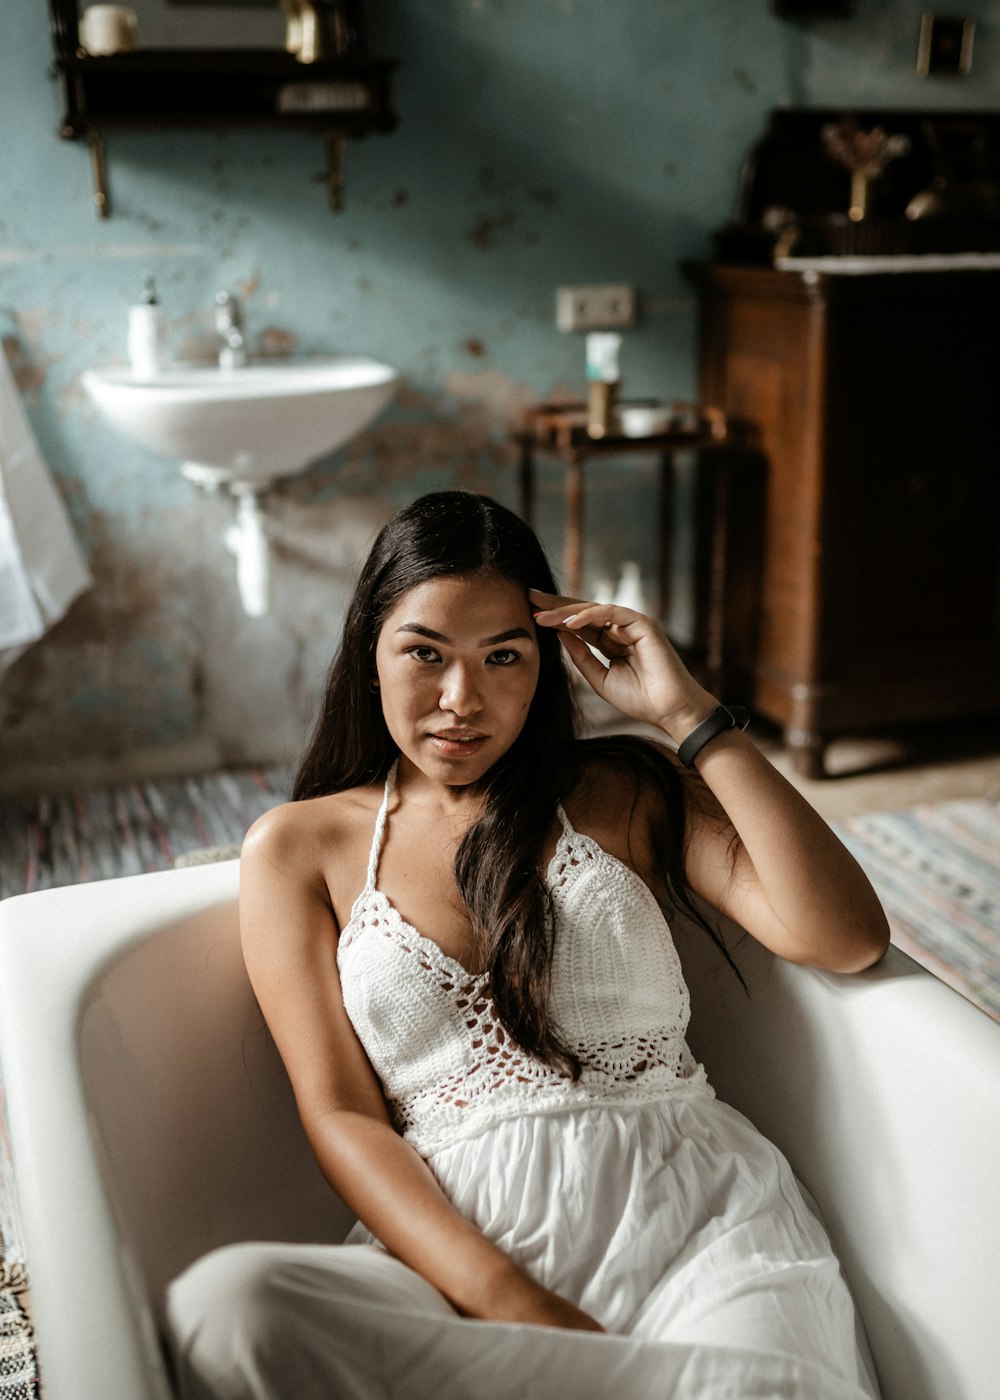 woman in white sleeveless dress sitting on white ceramic bathtub